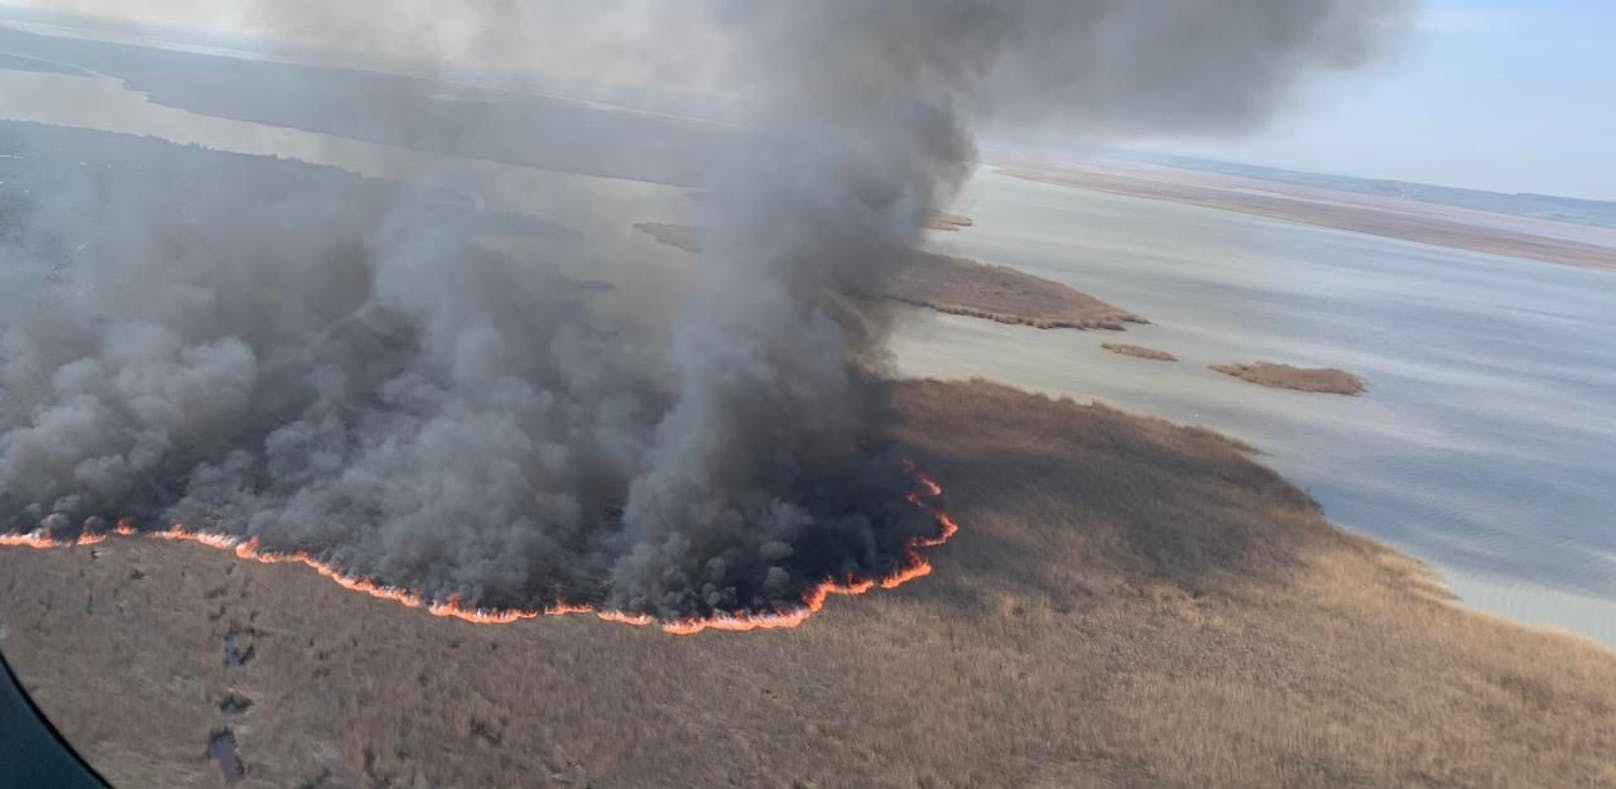 700 Hektar Schilf bei Großbrand vernichtet